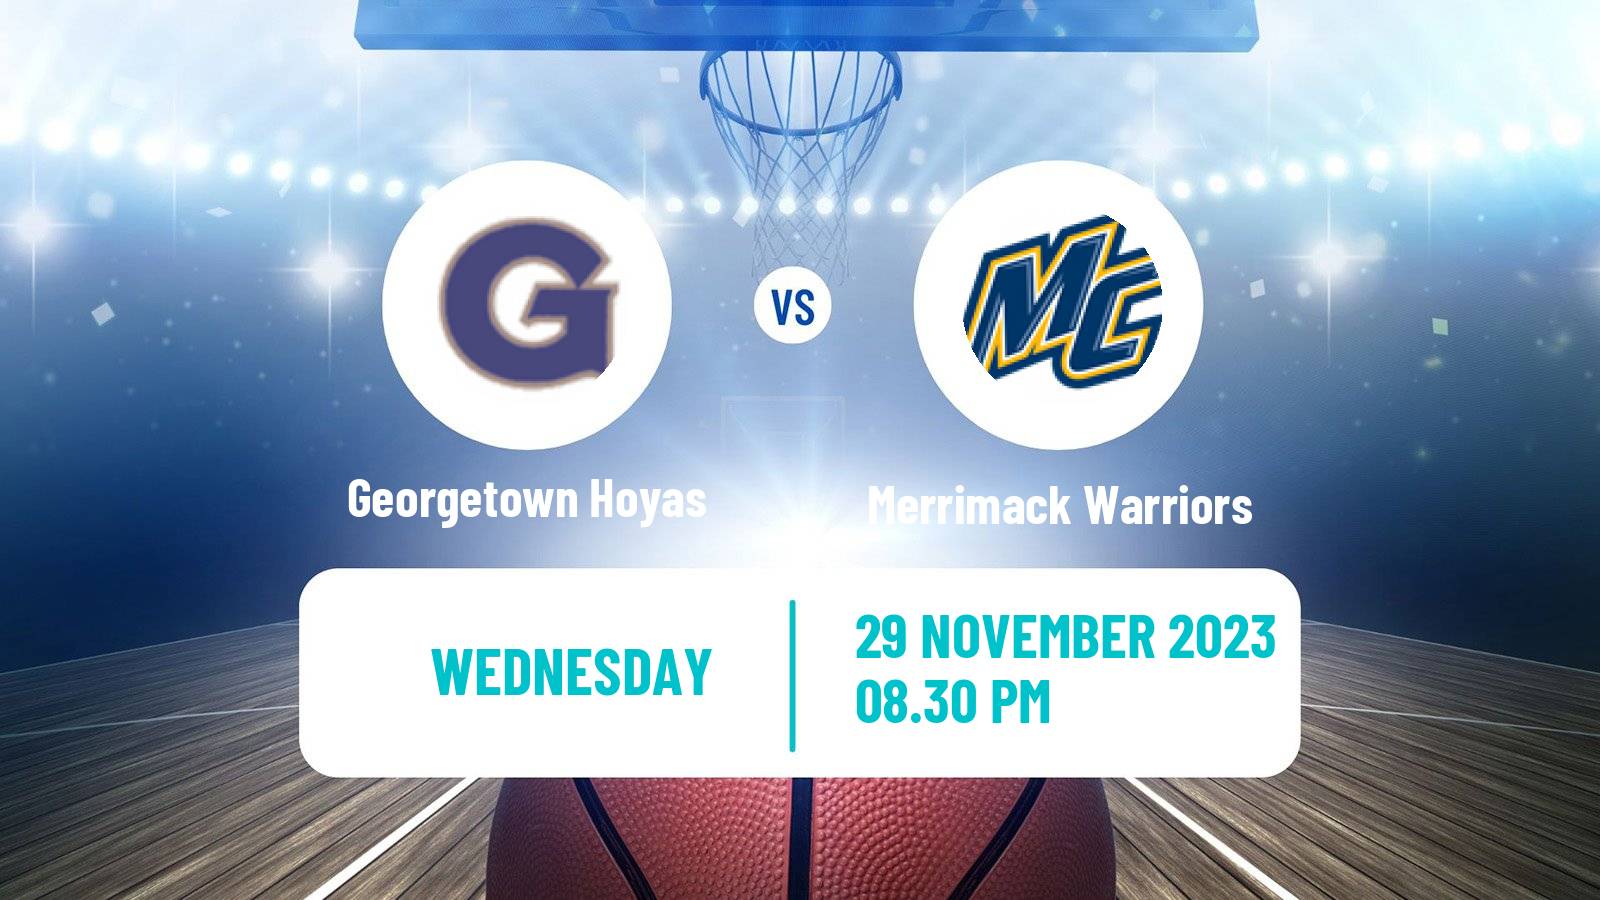 Basketball NCAA College Basketball Georgetown Hoyas - Merrimack Warriors